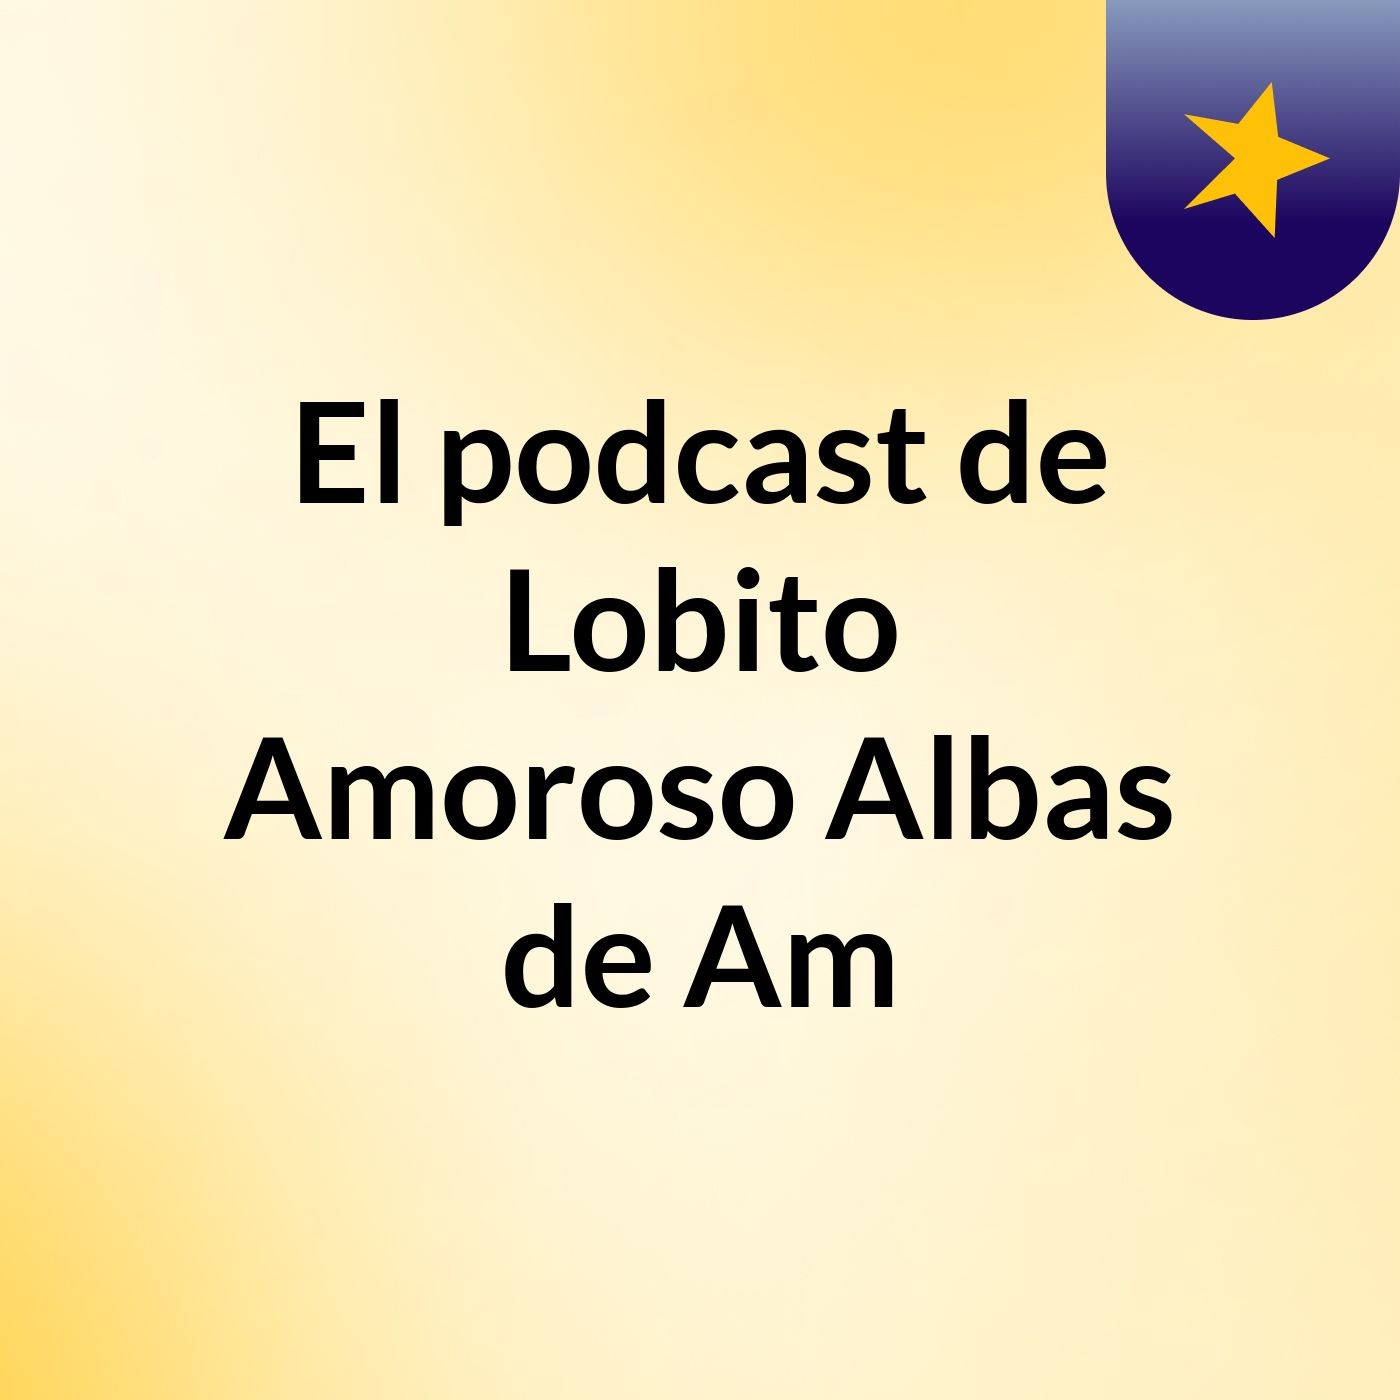 El podcast de Lobito Amoroso Albas de Am